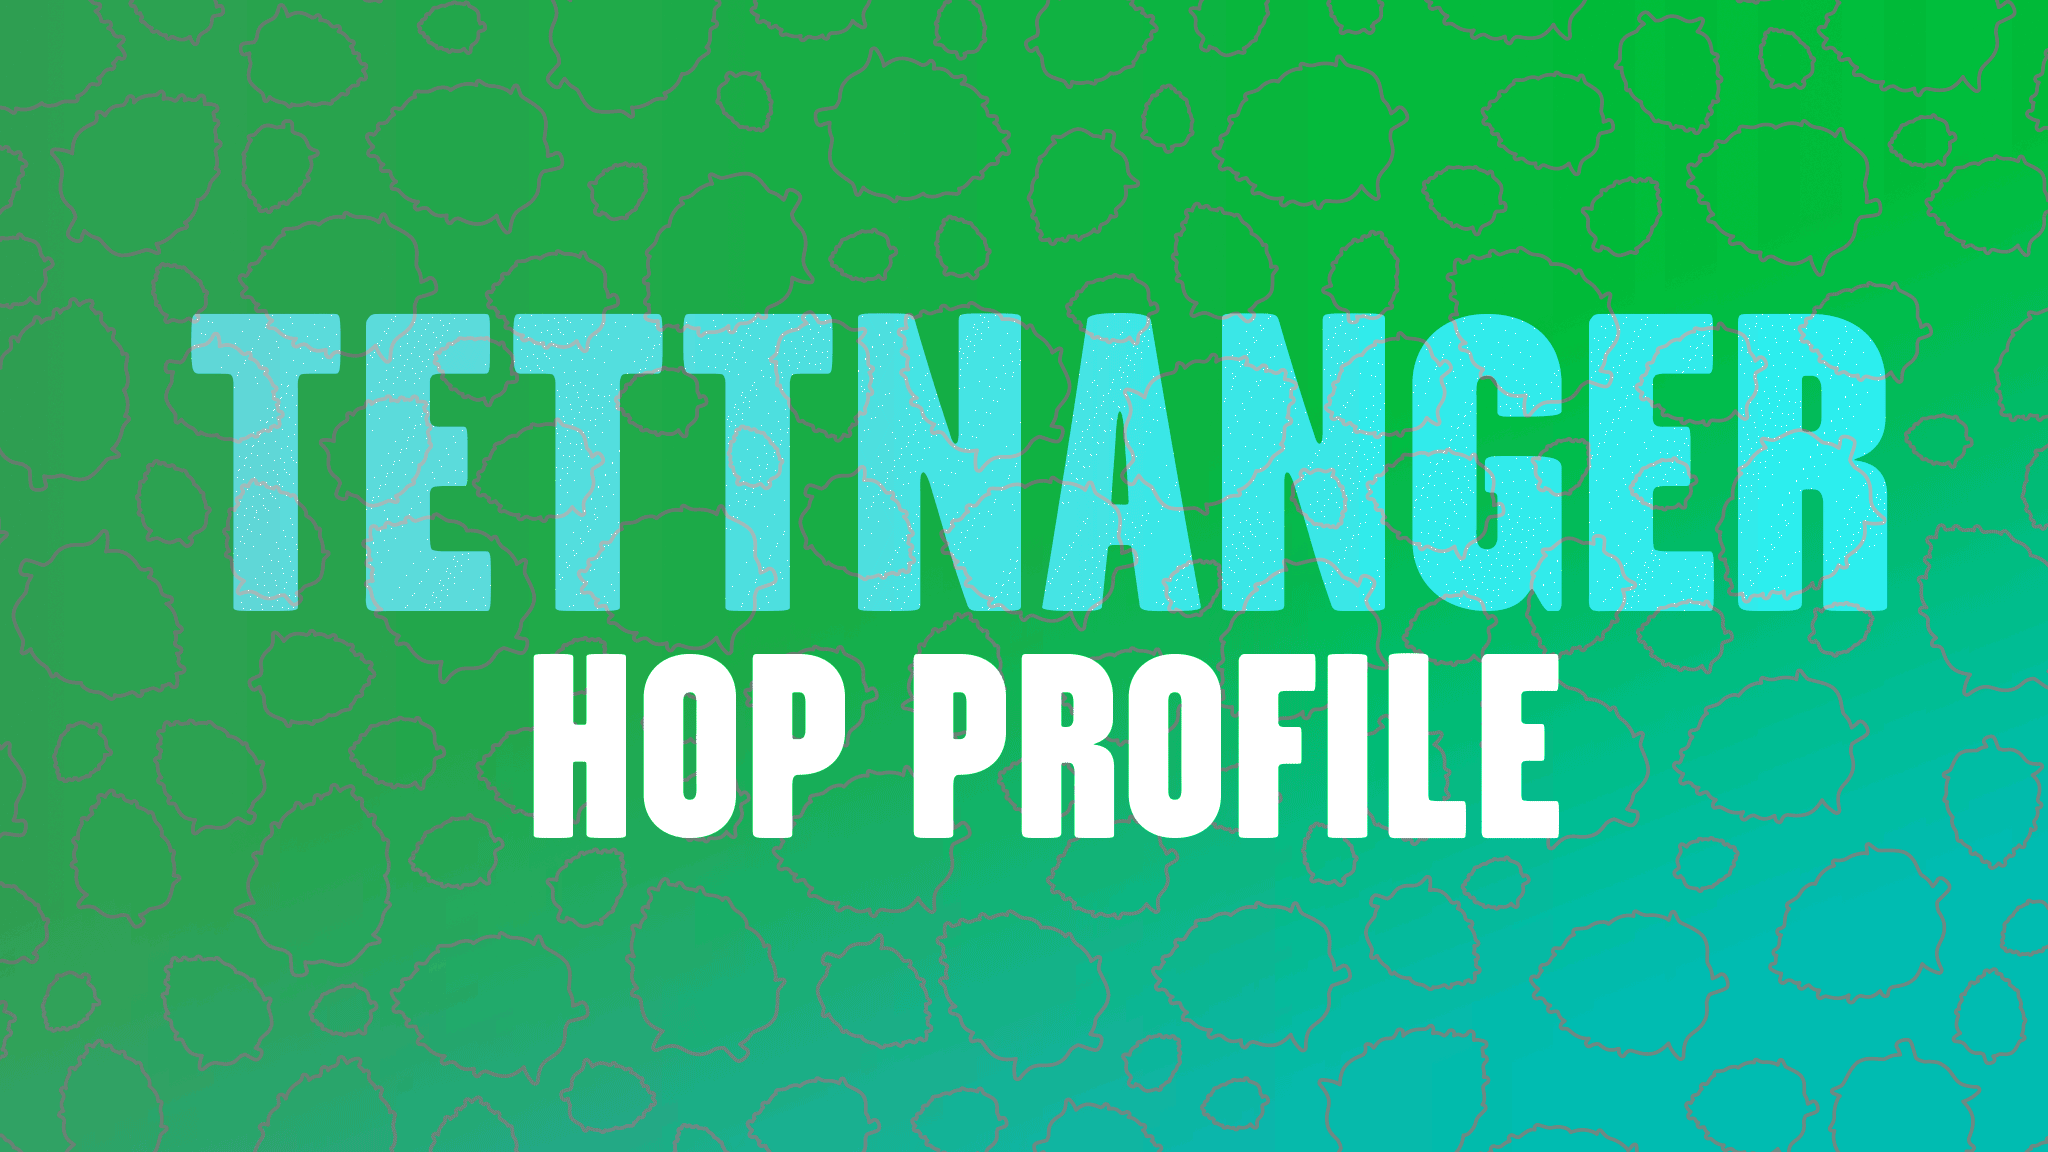 Hop Profile: Tettnanger